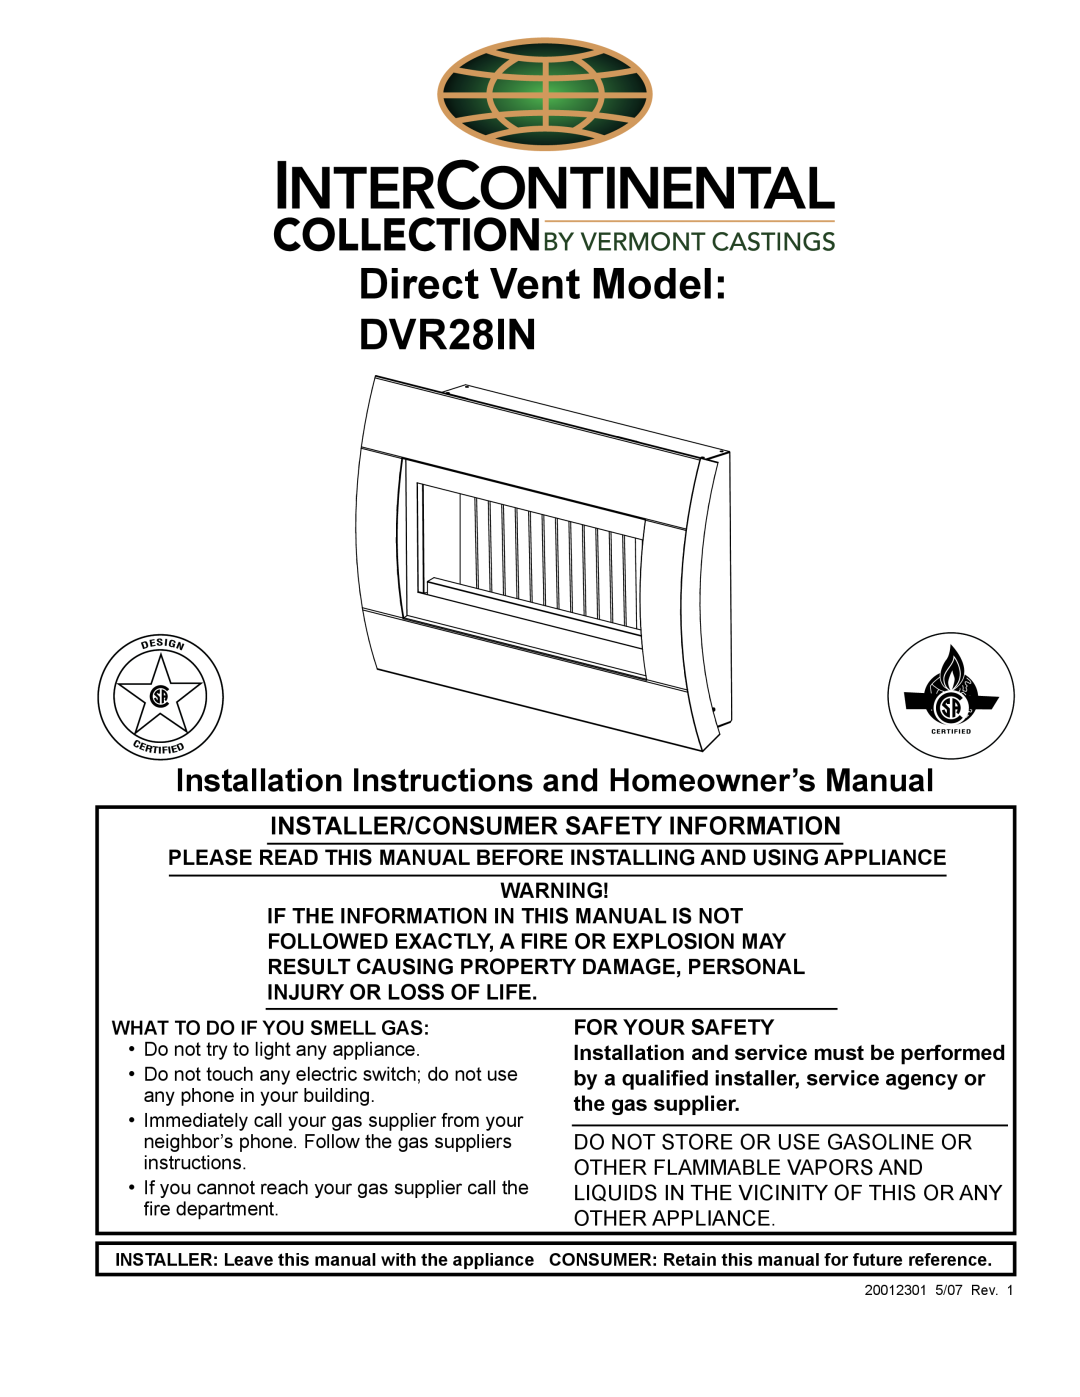 Vermont Casting installation instructions Installer/Consumer Safety Information, Direct Vent Model DVR28IN 